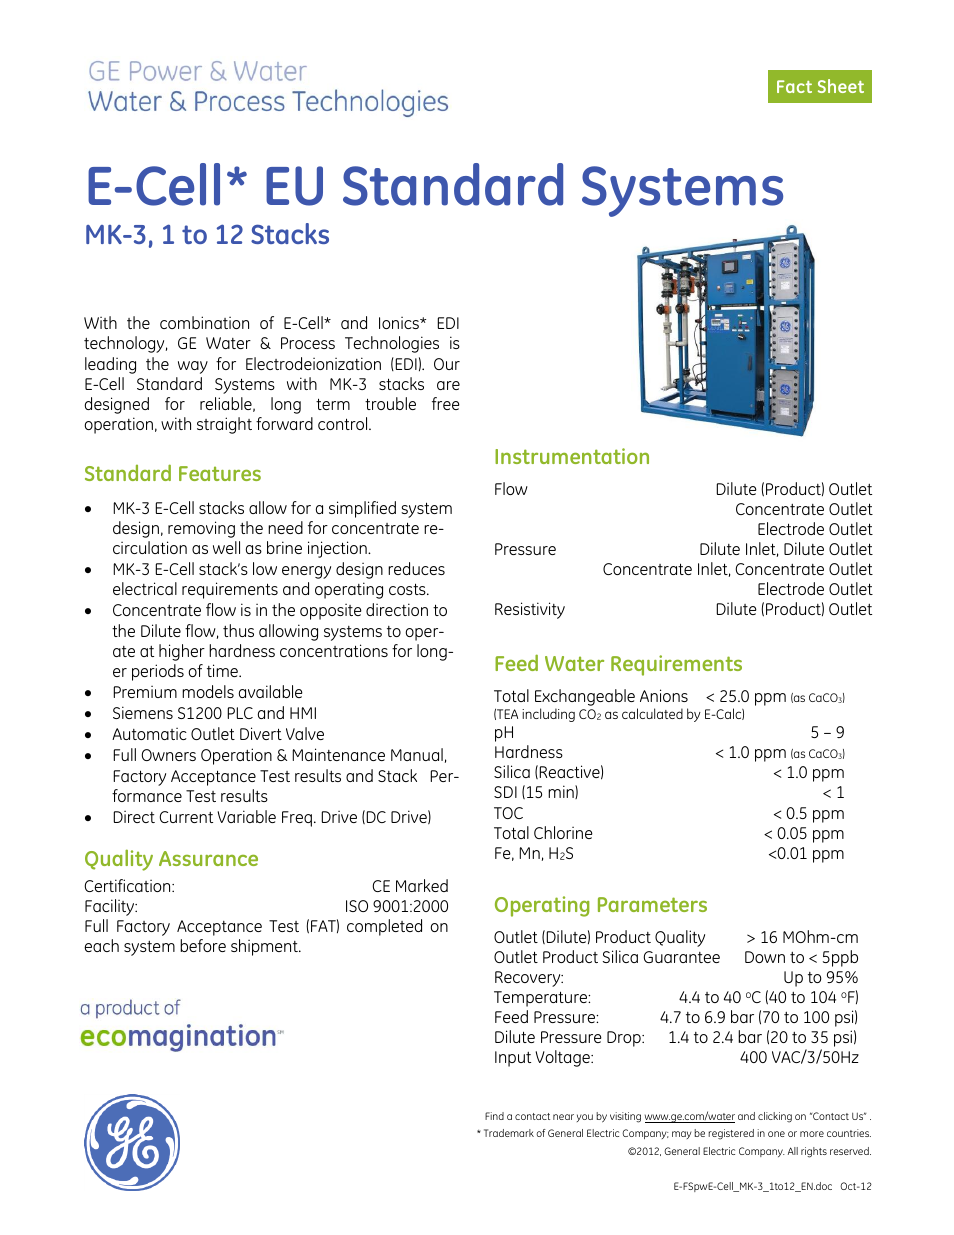 Electrodeionization (EDI) - E-Cell EU Standard Systems MK-3, 1 to 12 Stacks